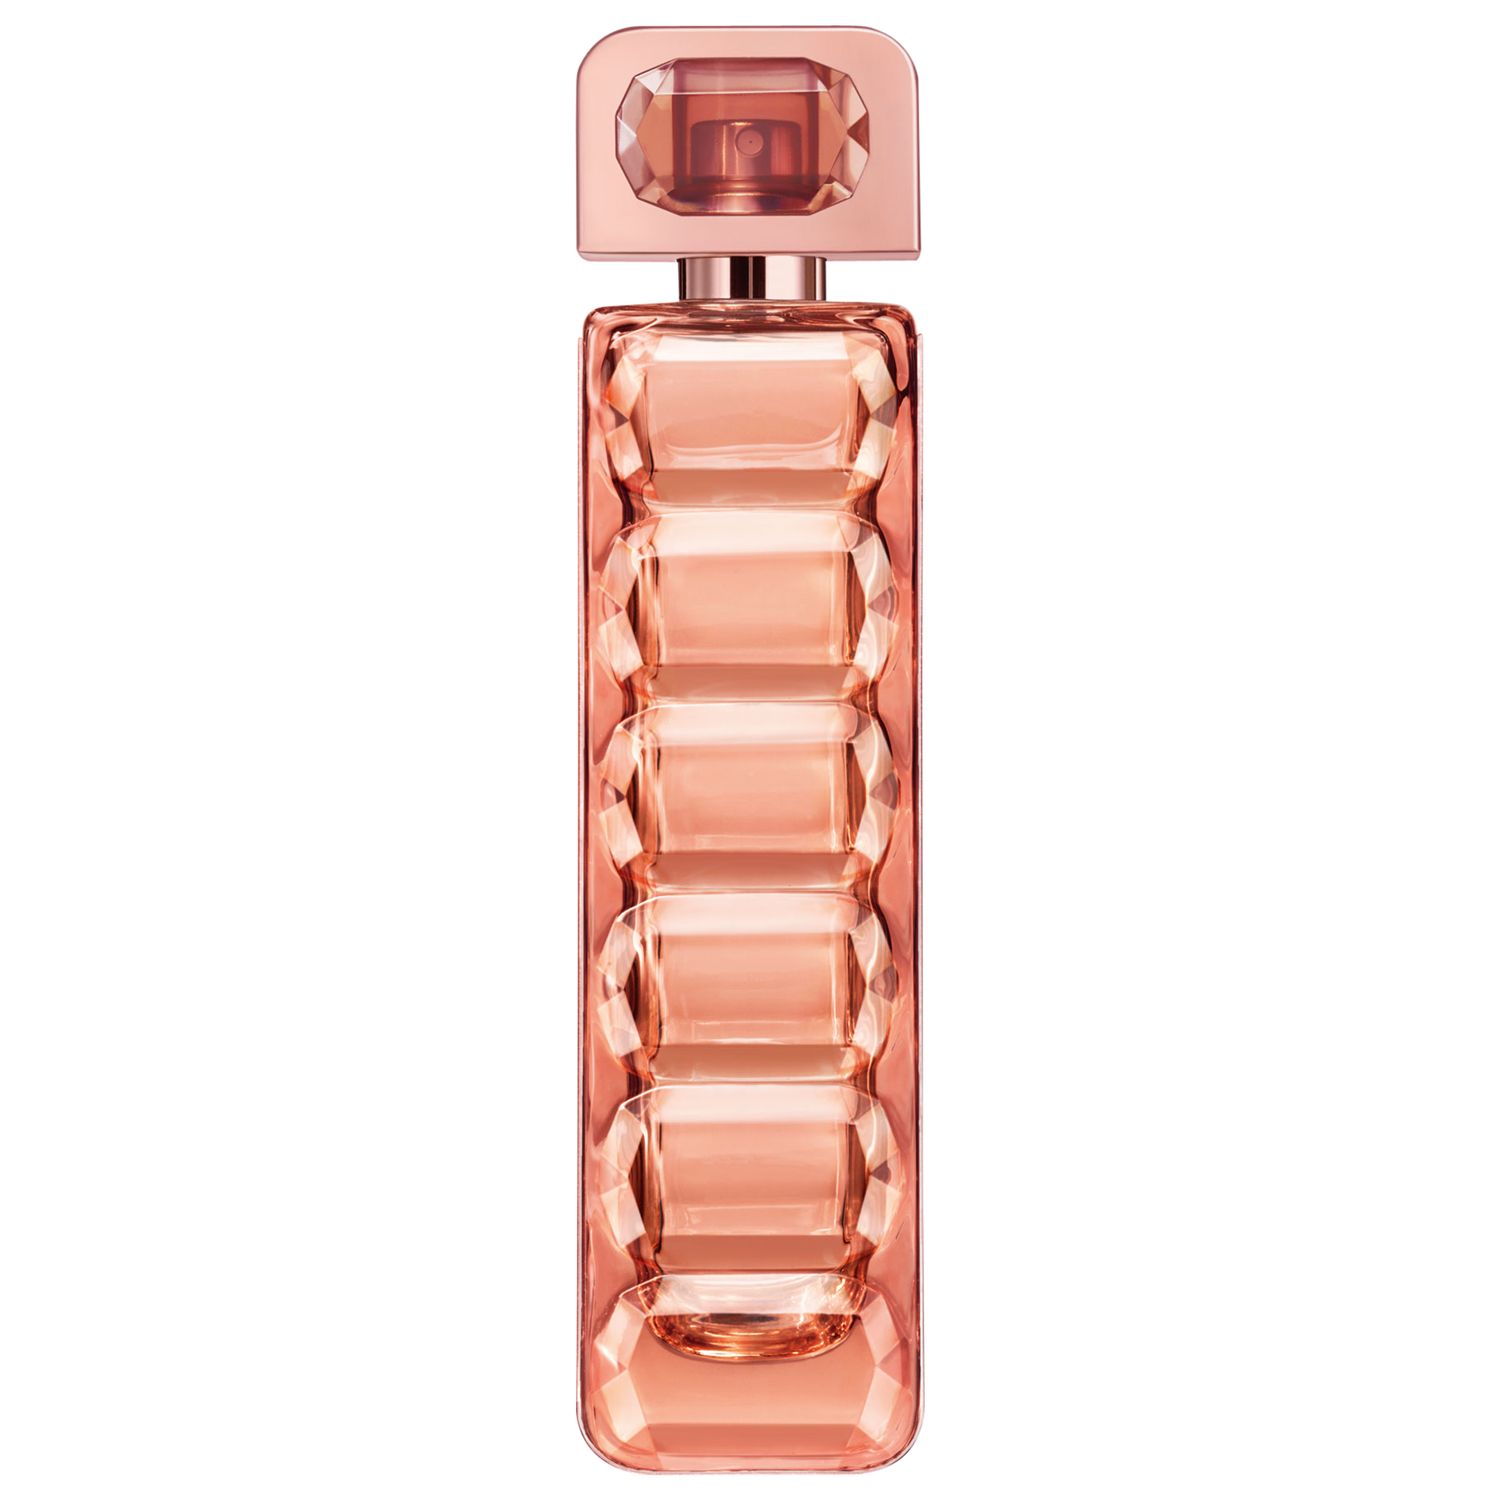 HUGO BOSS BOSS Orange Woman Eau de Parfum at John Lewis & Partners